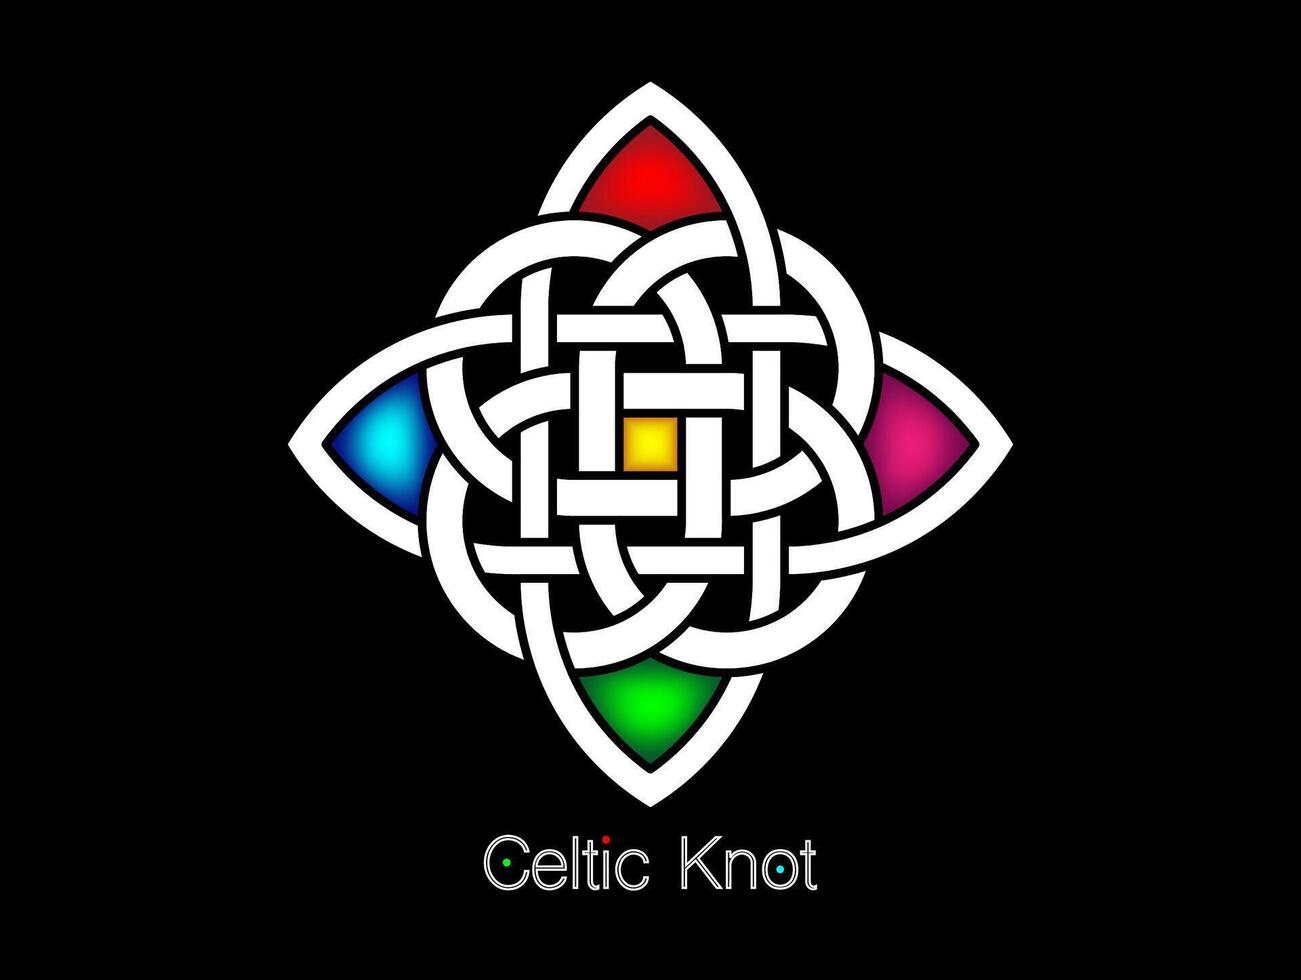 céltico nudo, entrelazado círculos logo, vistoso vector tatuaje ornamento entrelazado cinta aislado en negro antecedentes